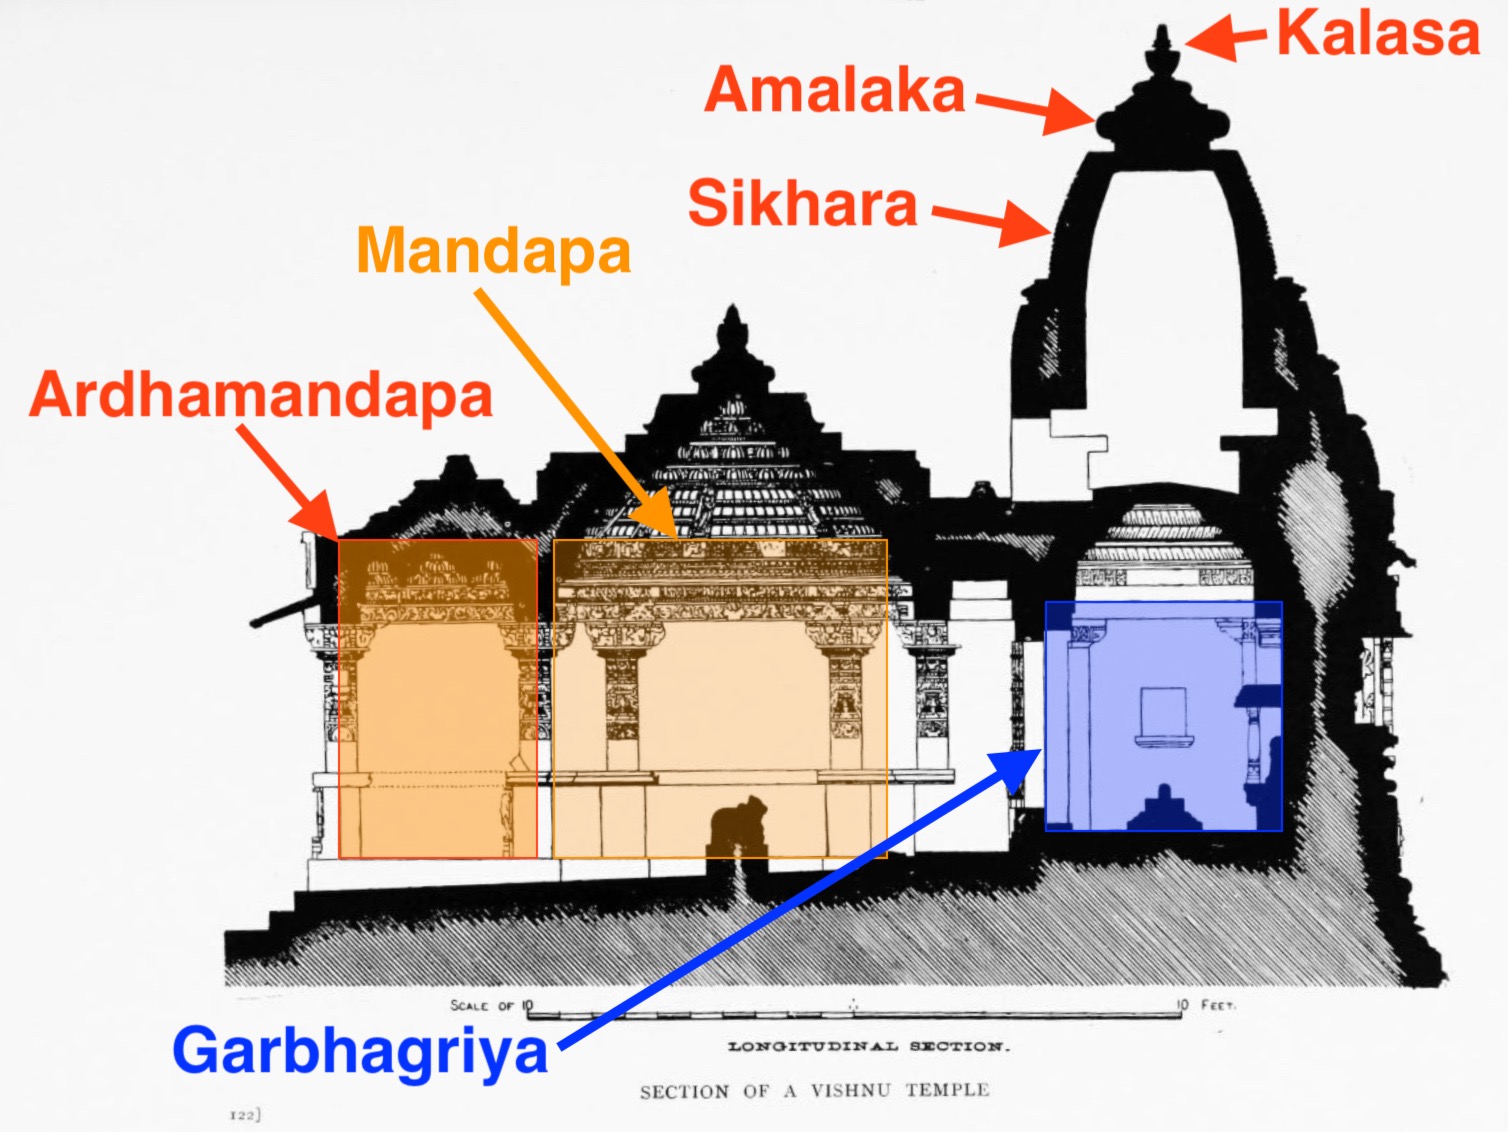 struttura-del-tempio-indu